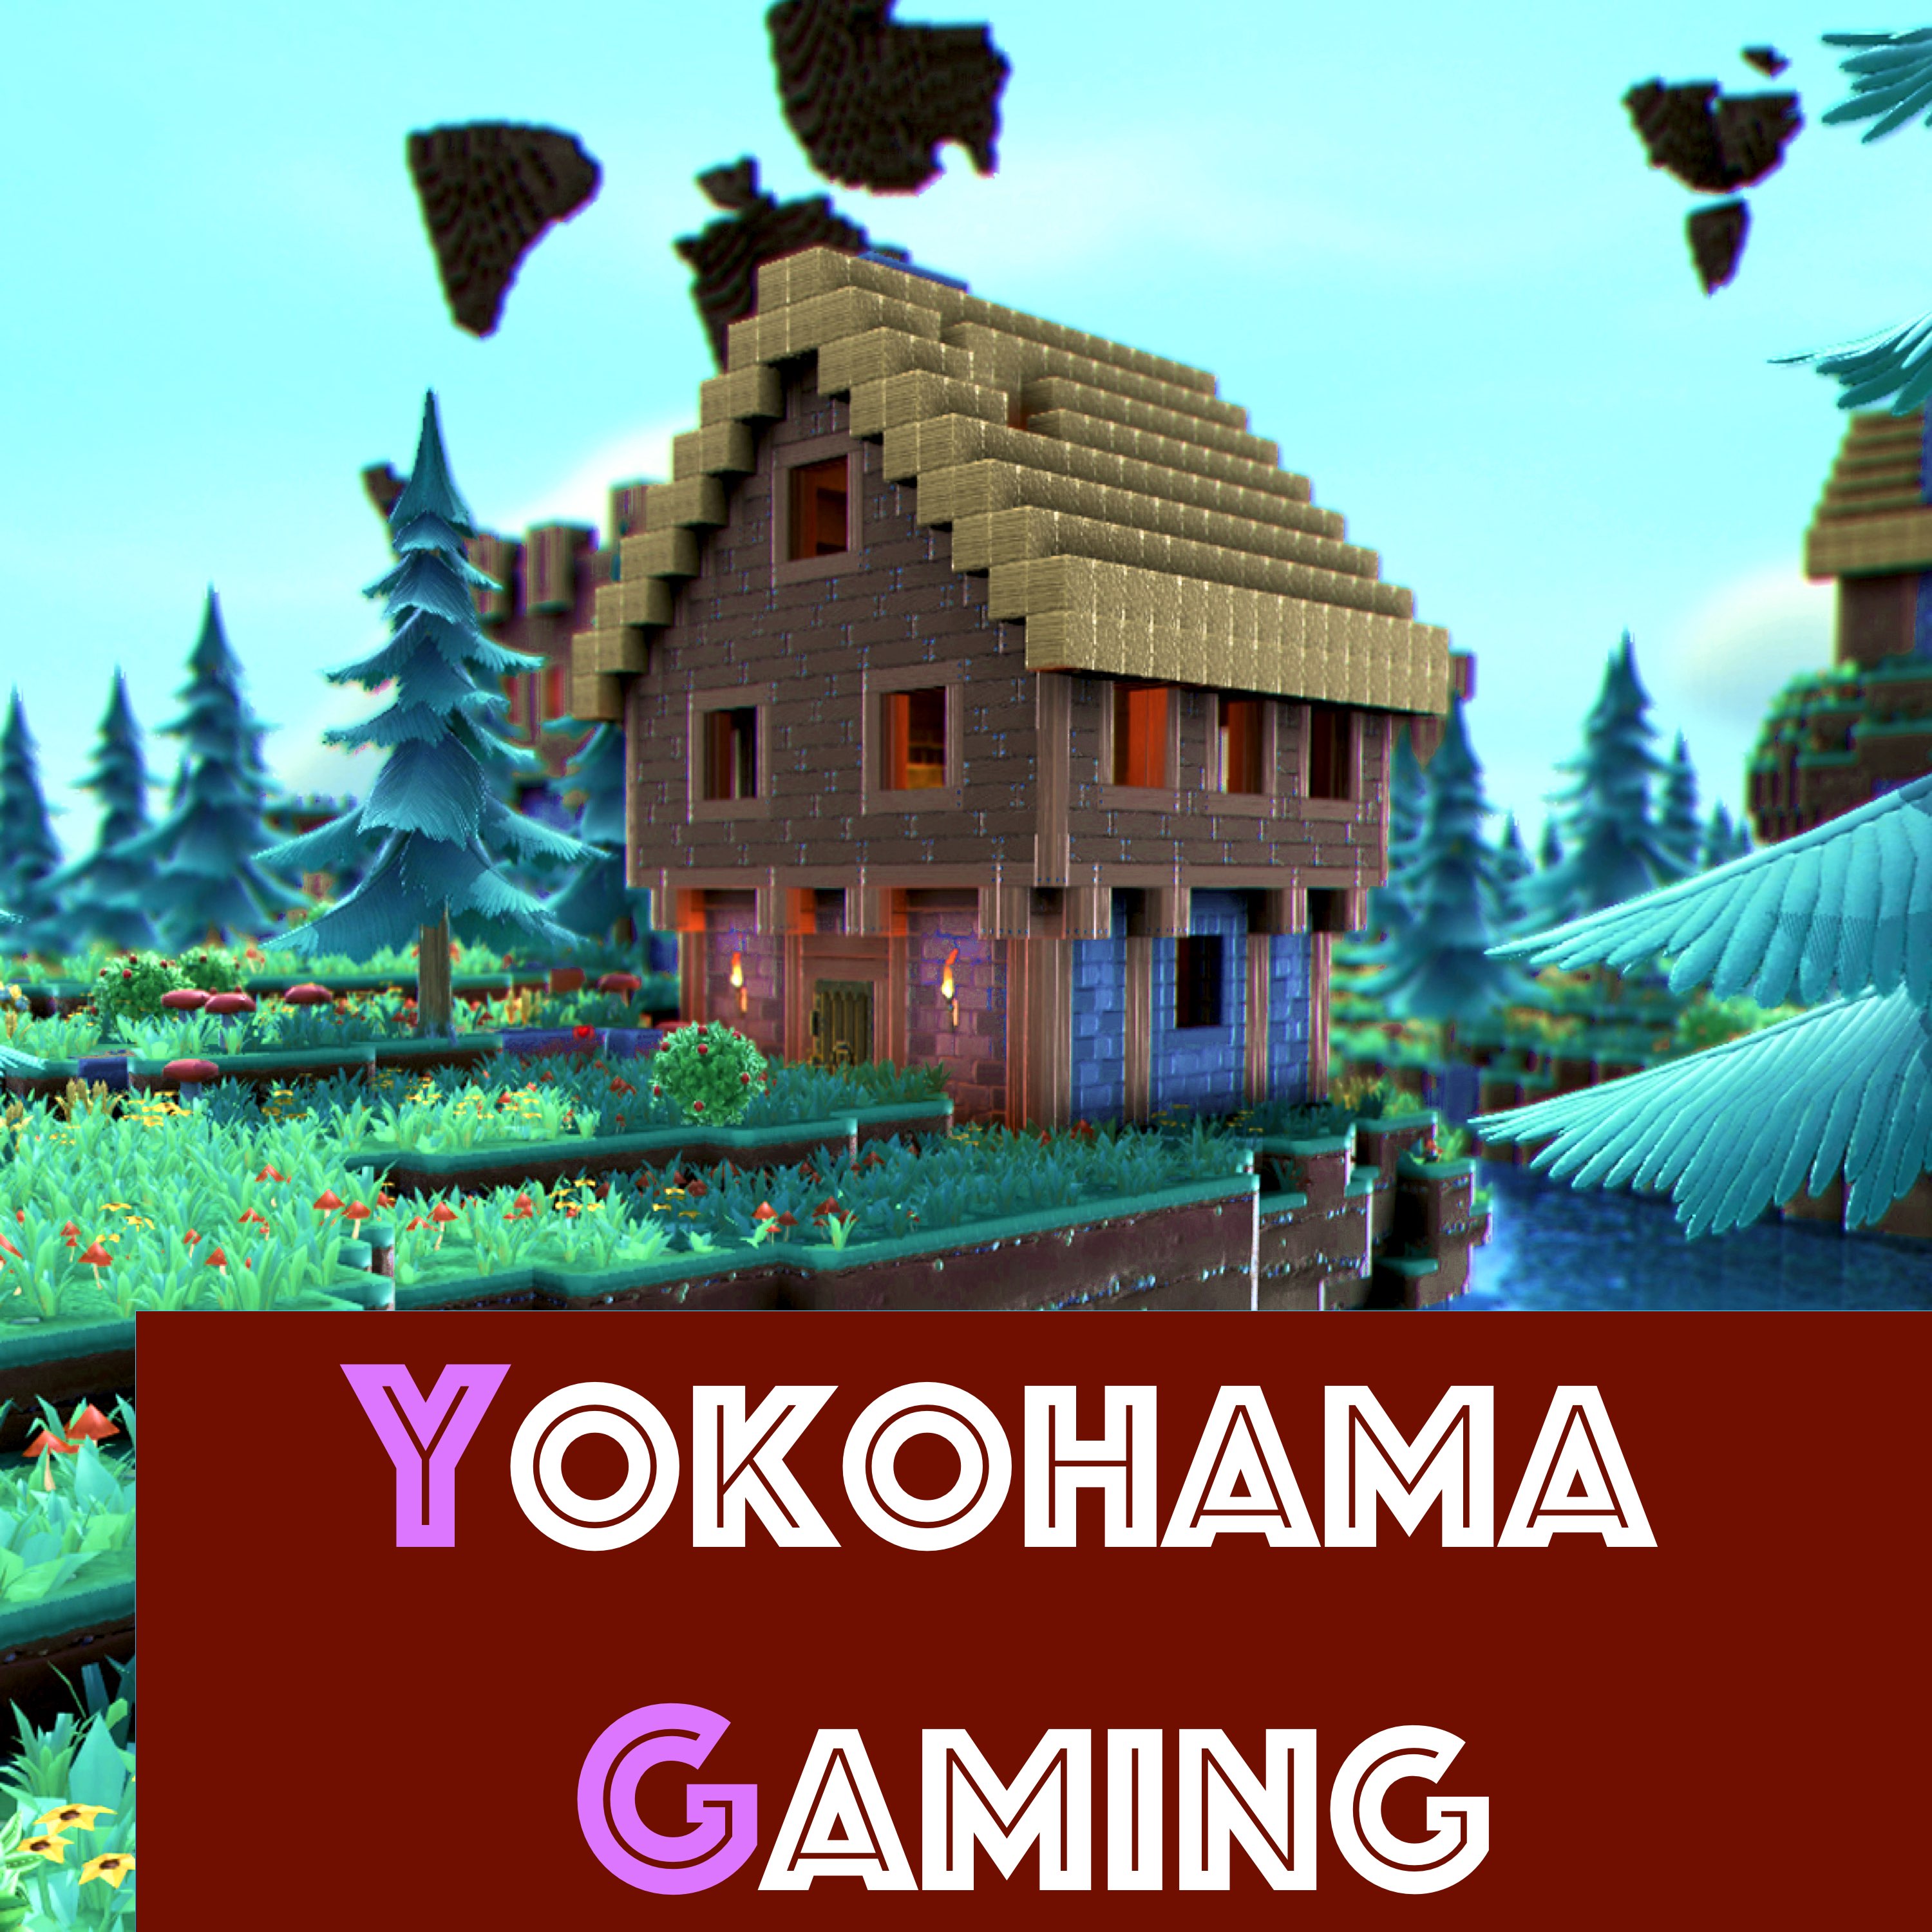 Visual representation of the Yokohama Gaming project